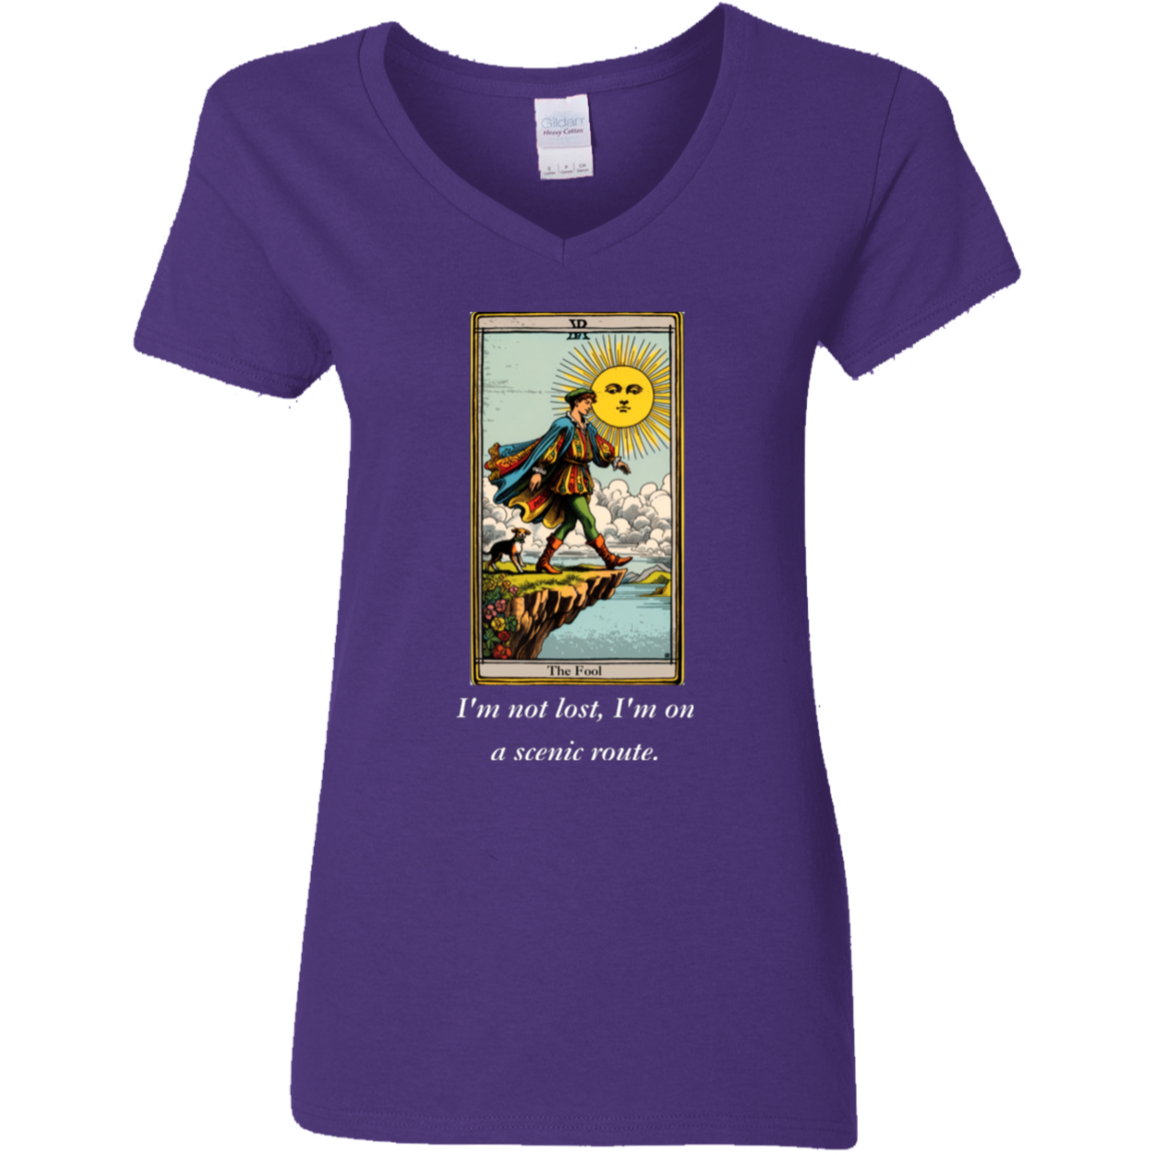 Funny the fool women's purple tarot card T shirt from BLK Moon Shop